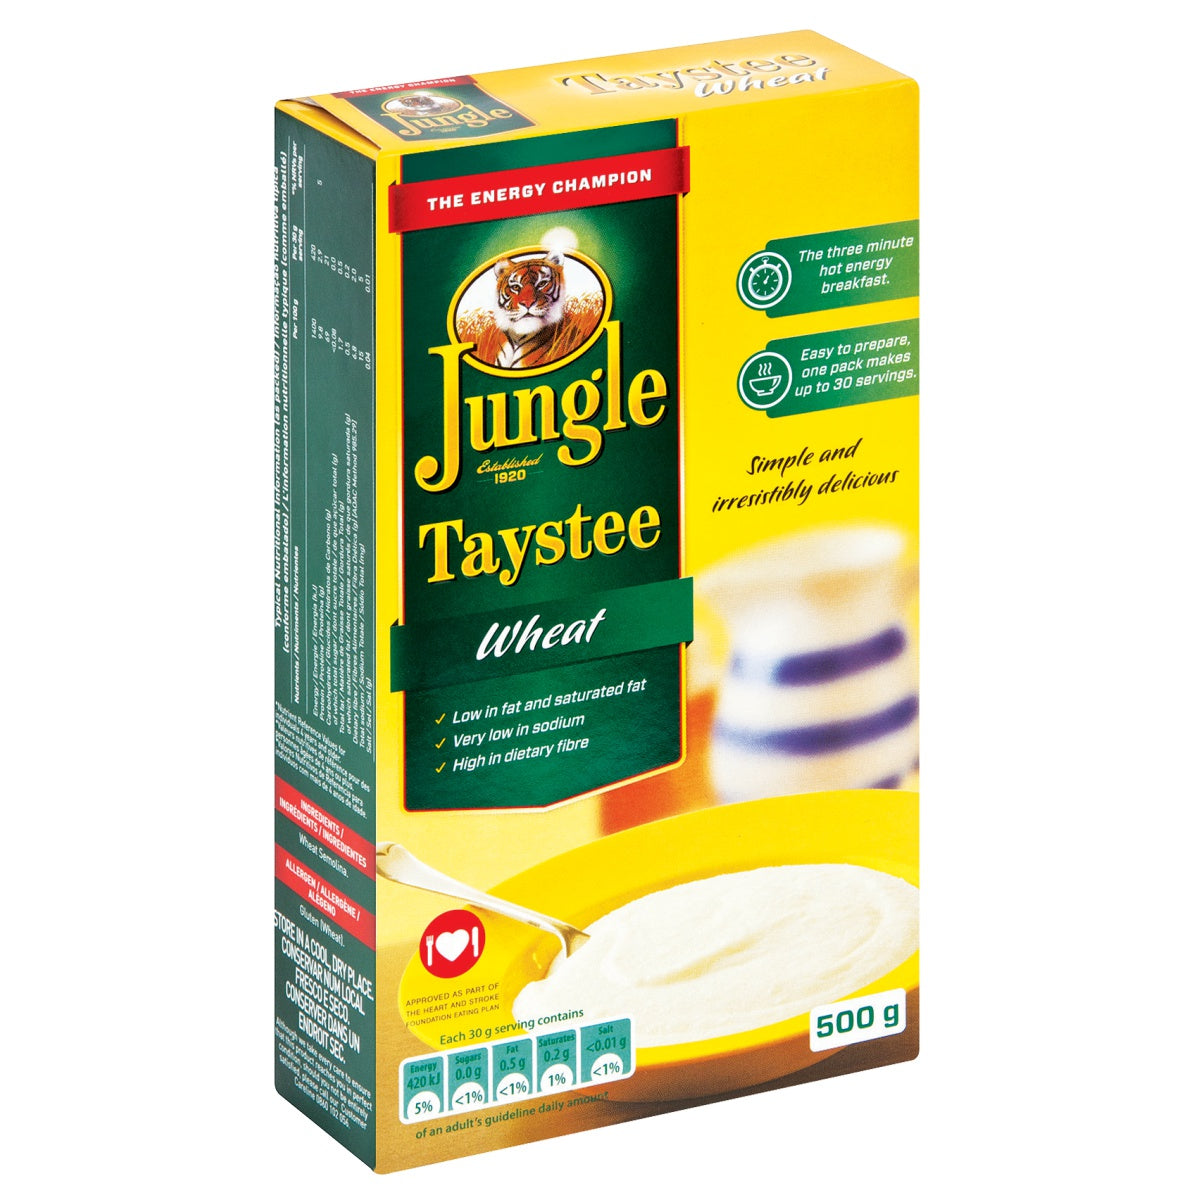 Taystee Wheat Jungle 500g